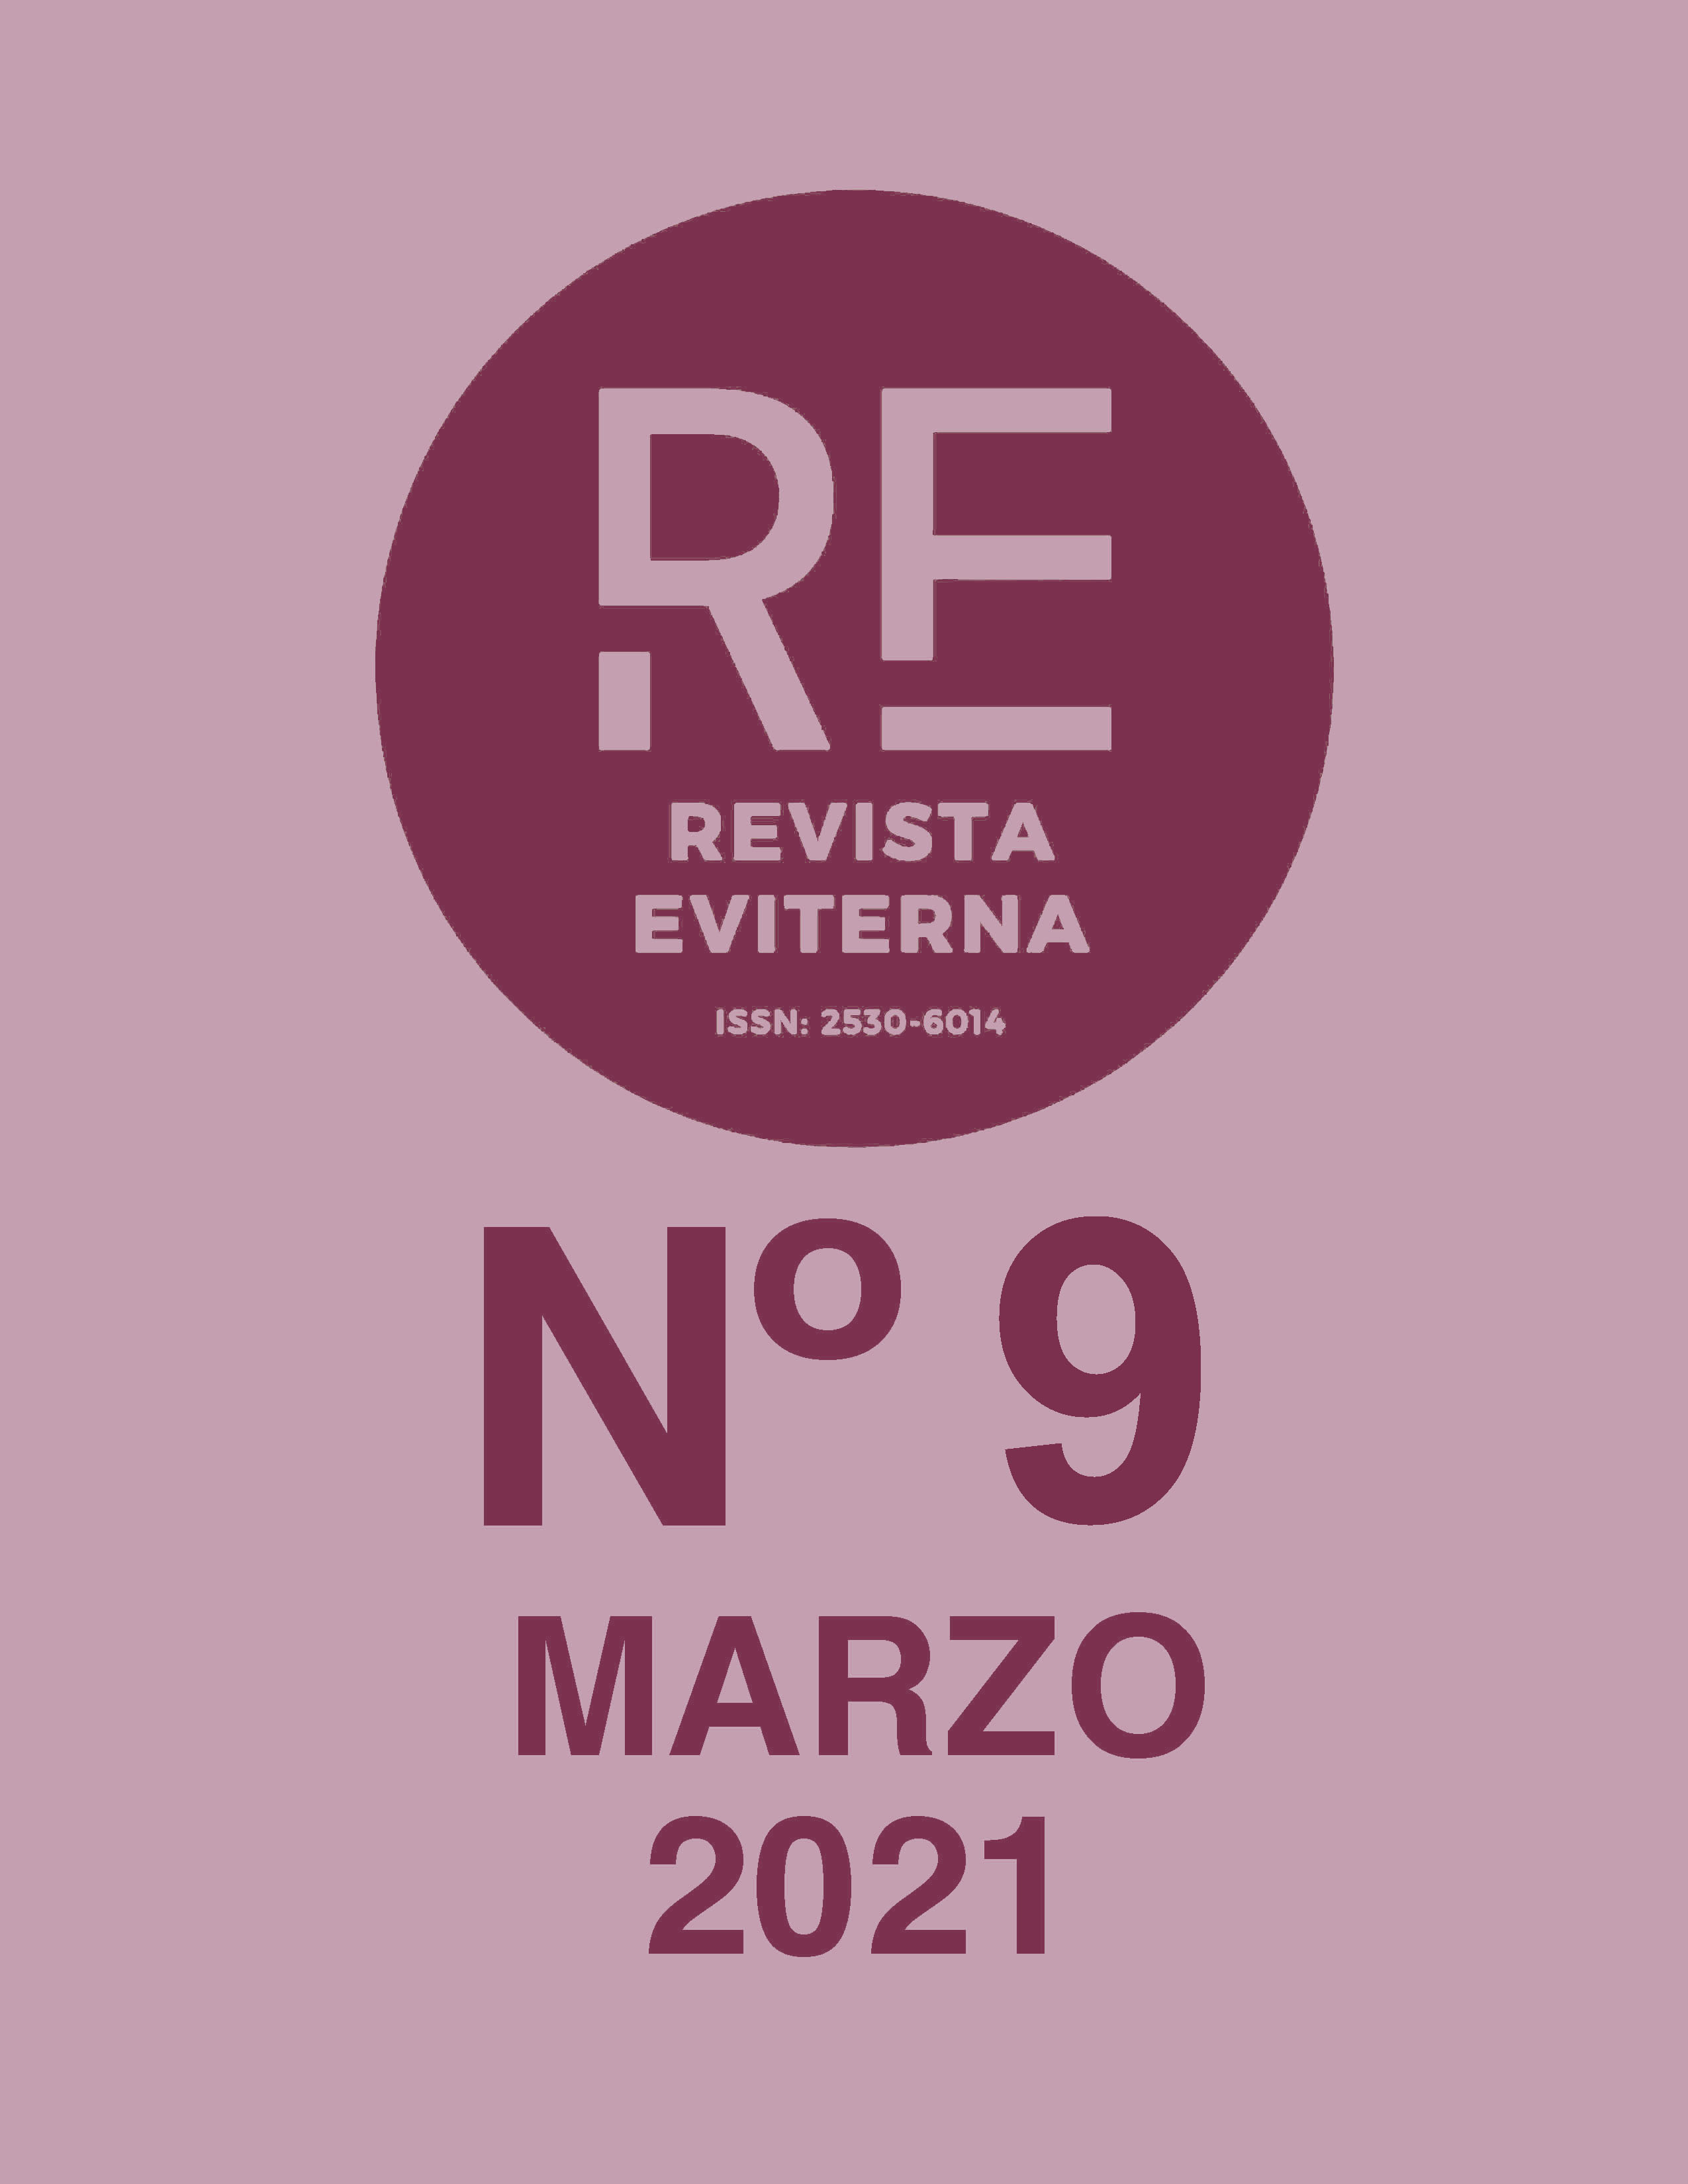 					View No. 9 (2021): Revista Eviterna Nº 9, March 2021
				